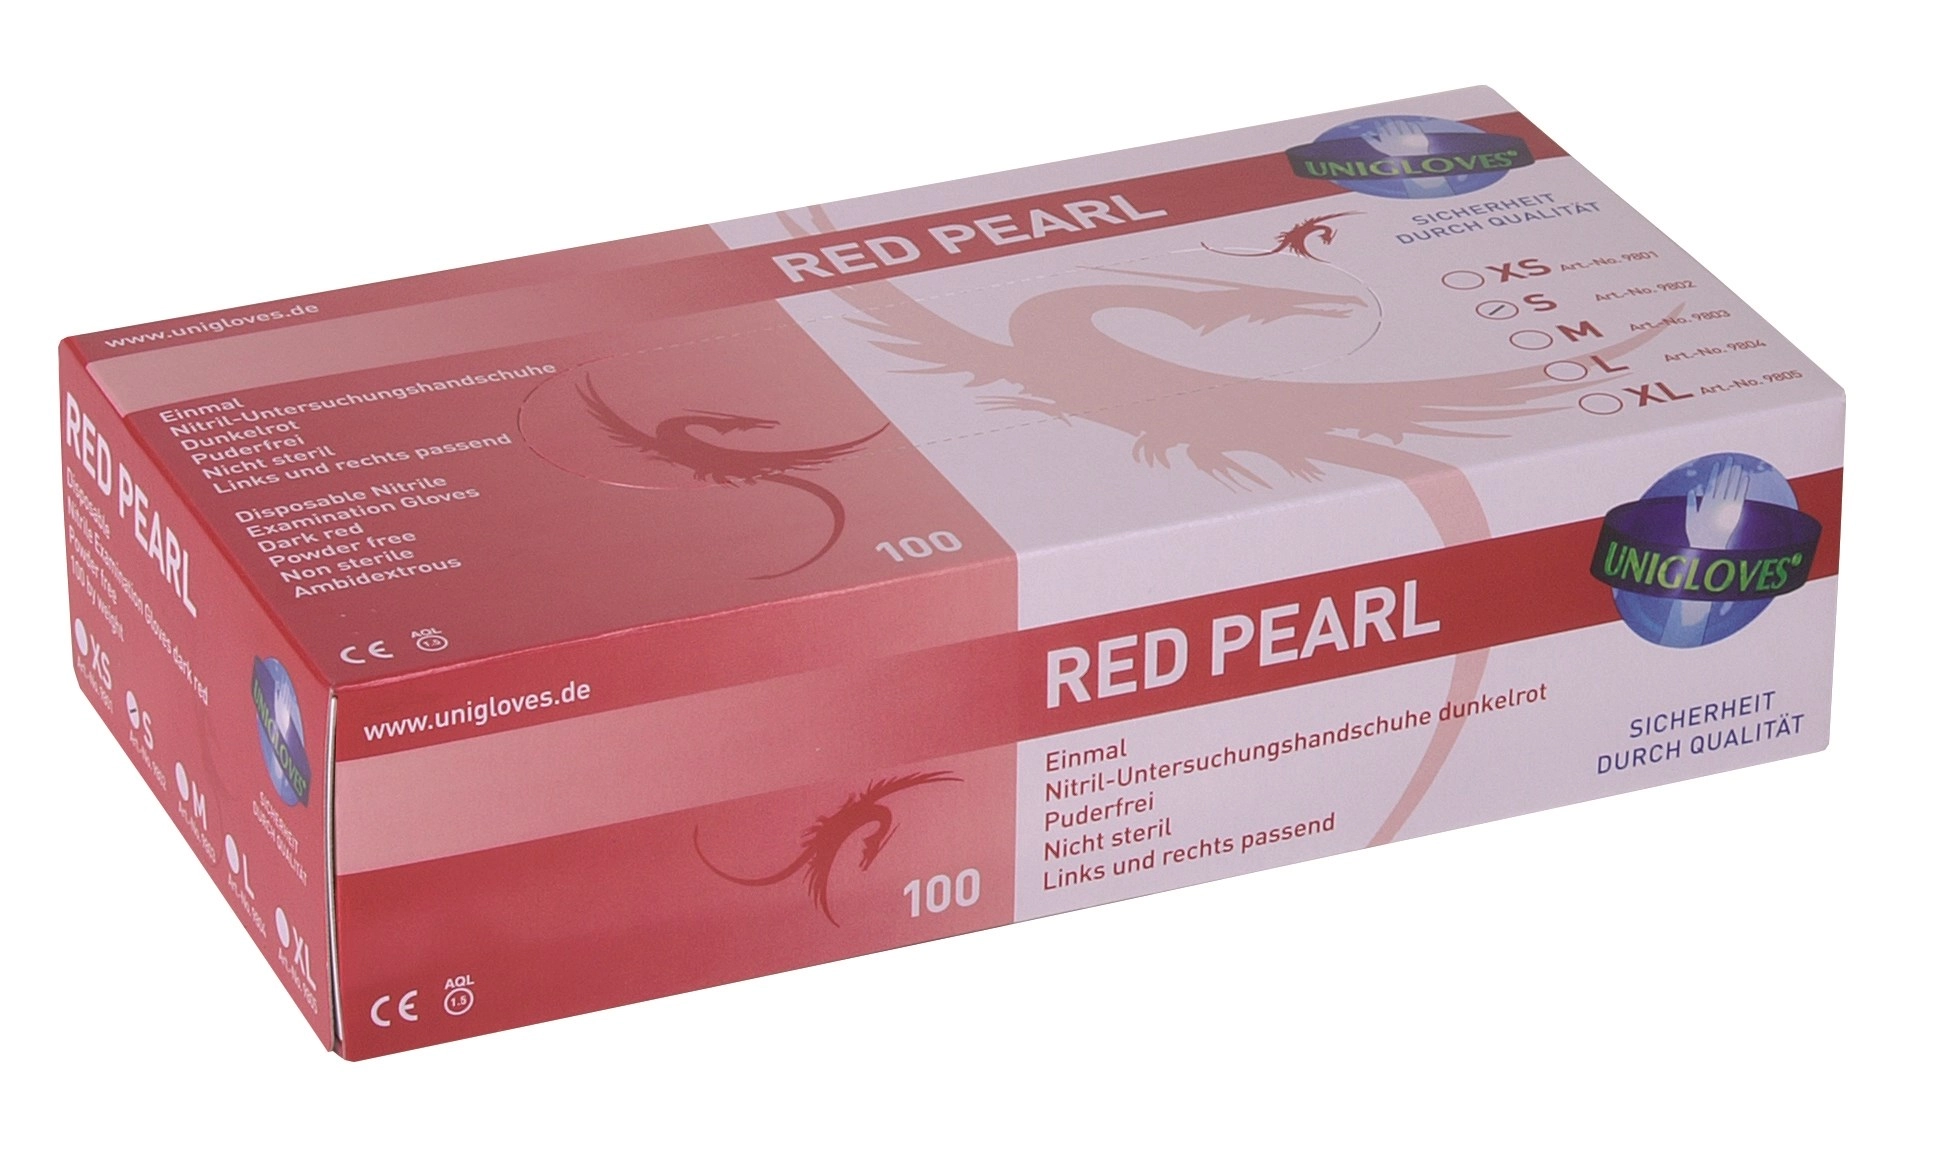 GANTS NITRILE RED PEARL - 100 unités